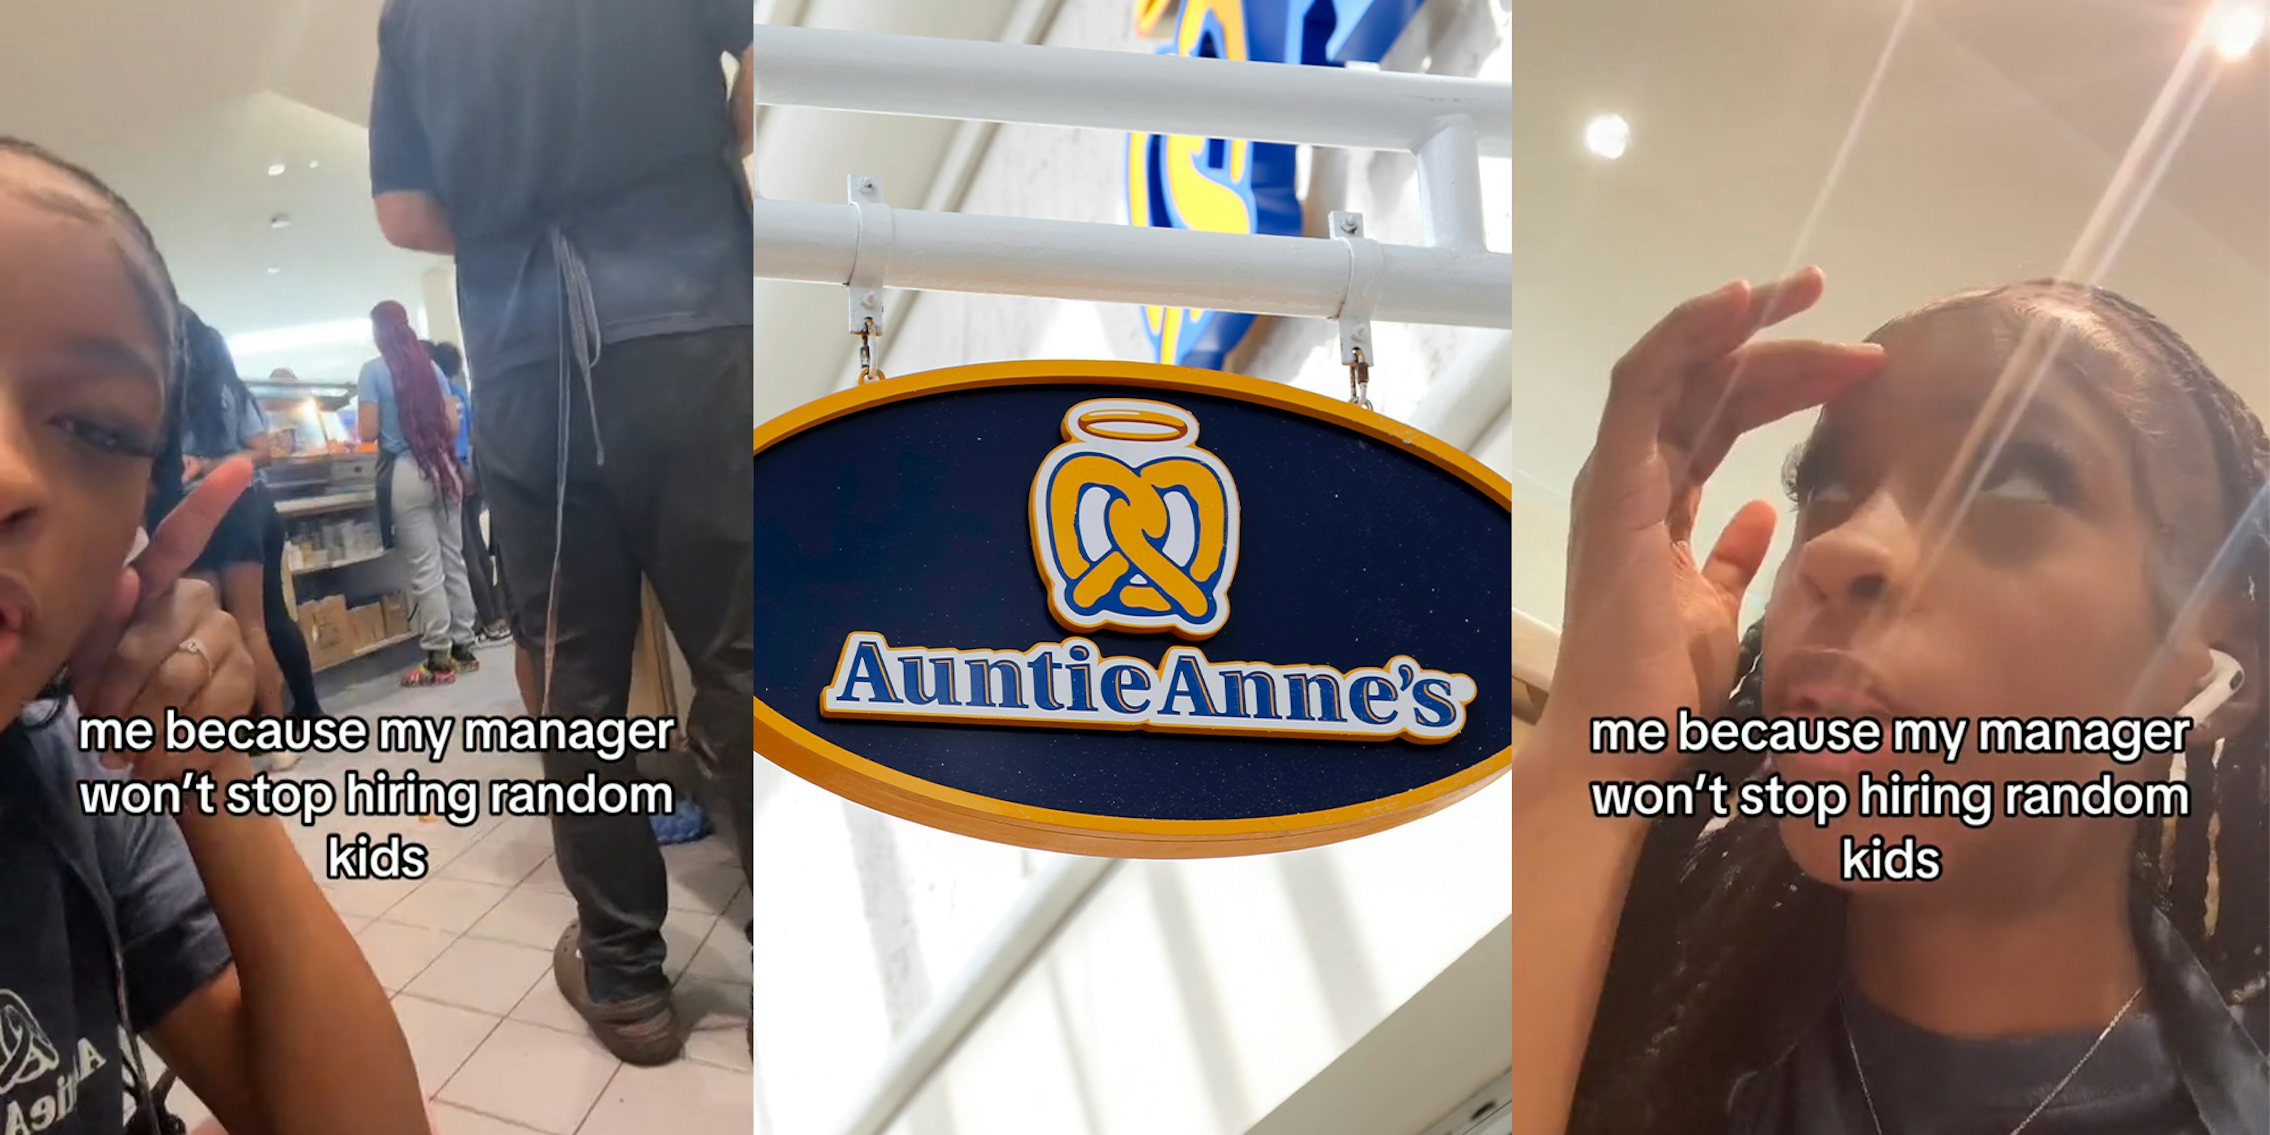 Auntie Anne's worker says manager keeps hiring 'random kids'